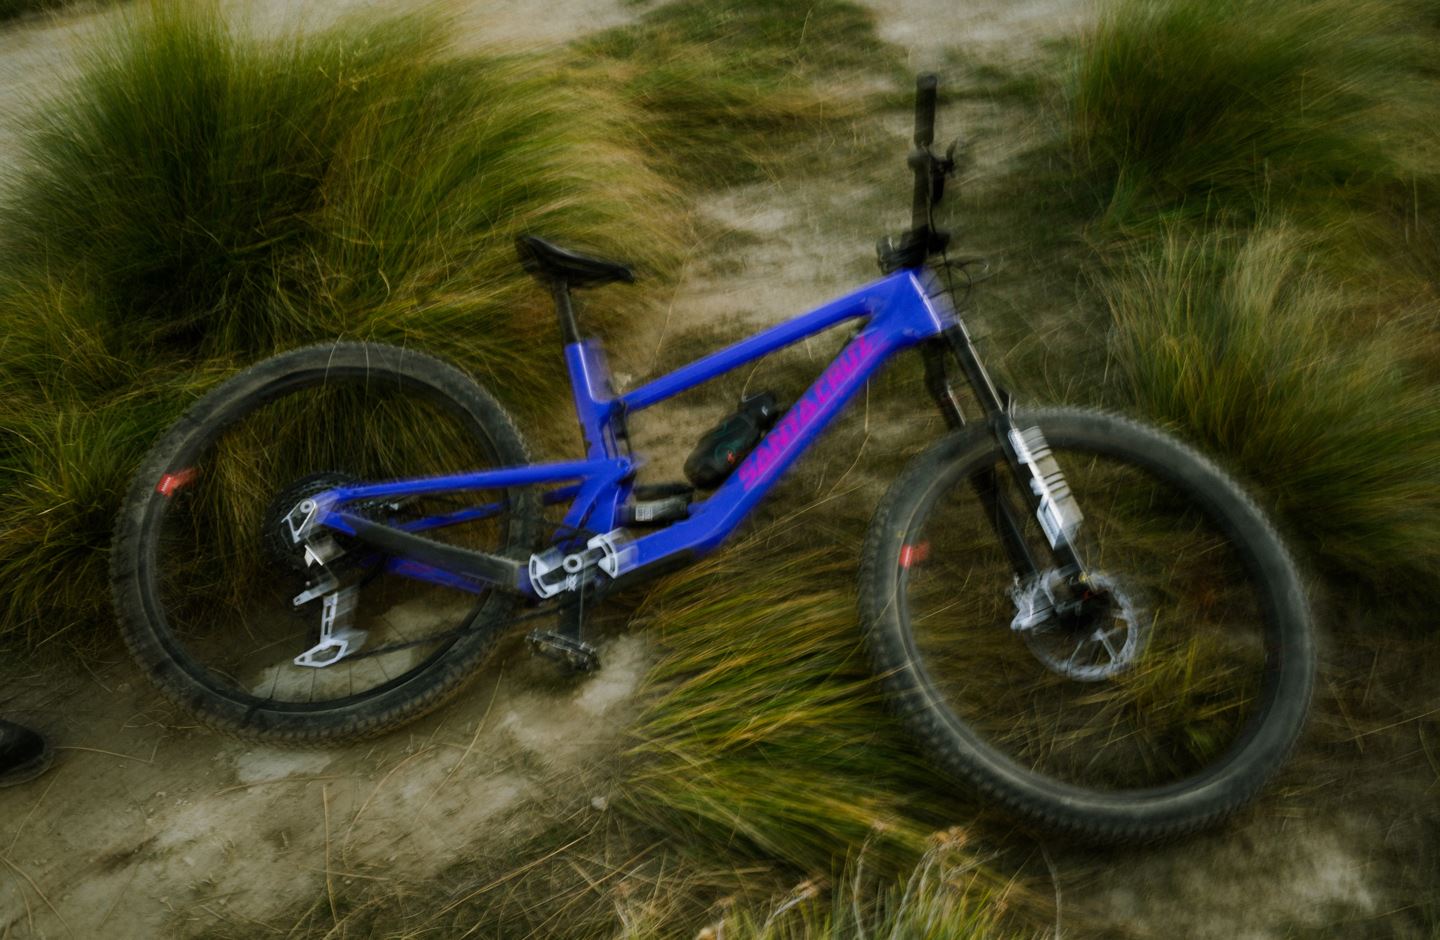 ben Hildreds blue mountain bike laying in grass